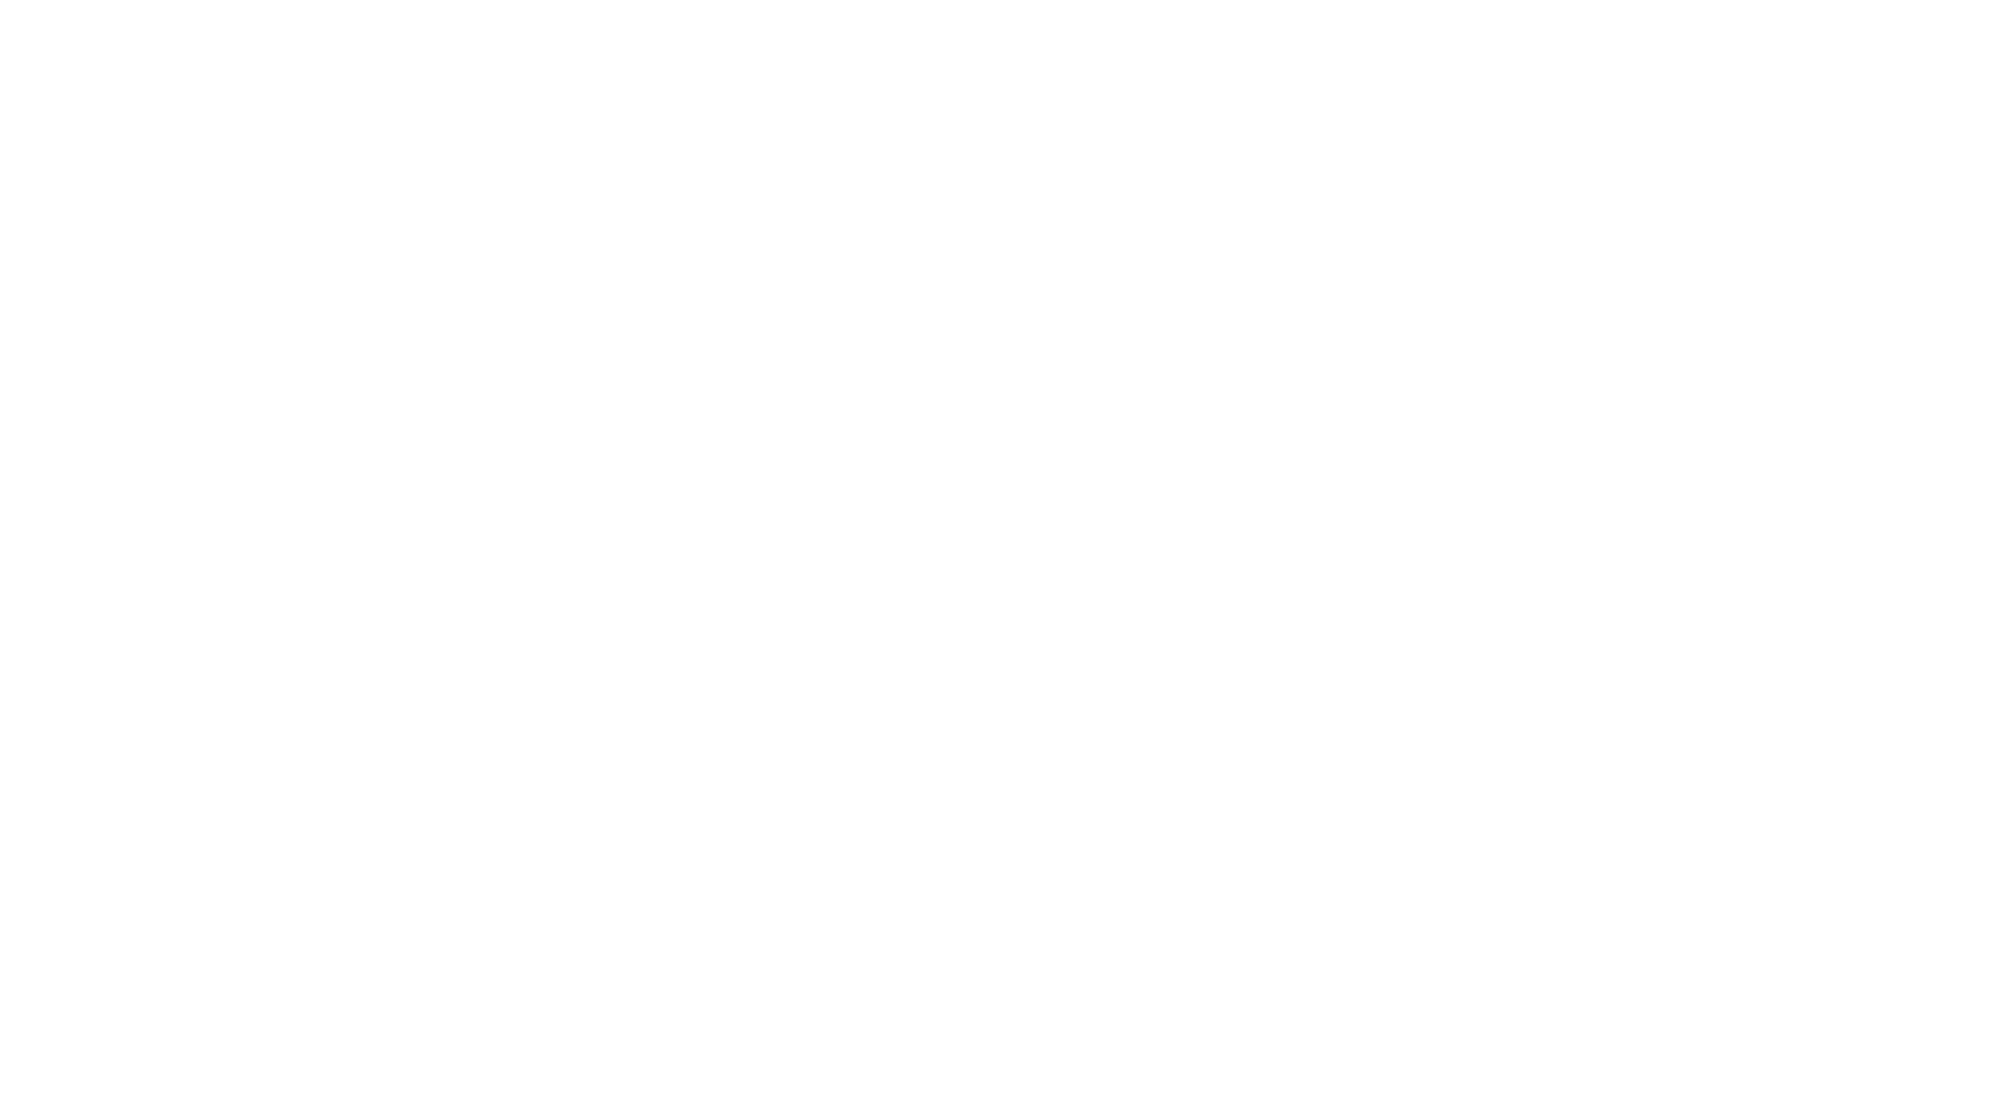 Executive Mosaic